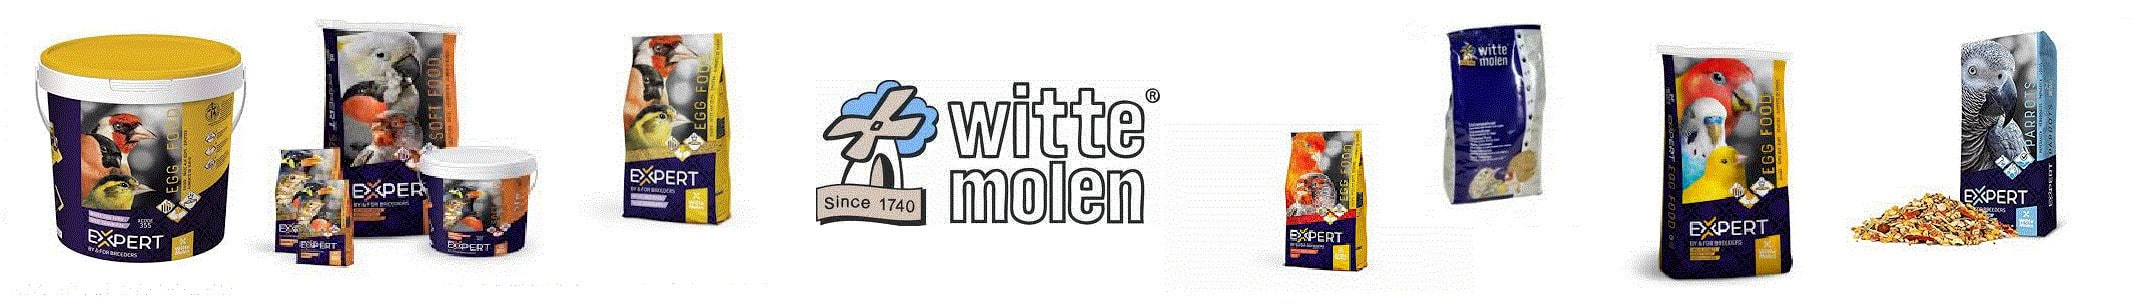  WHITTE MOLEN 